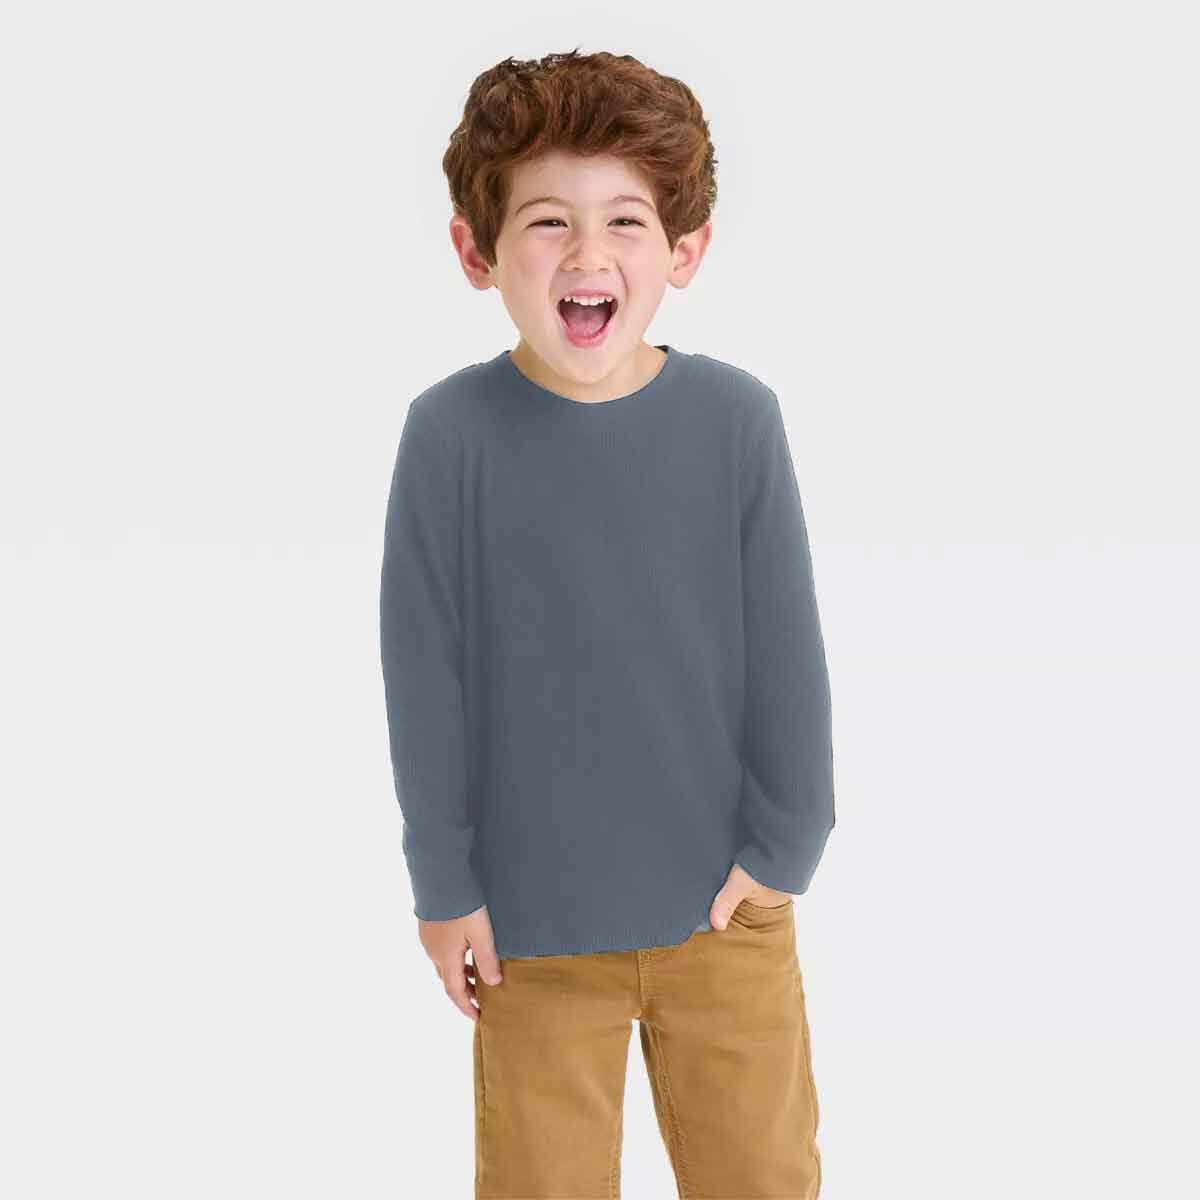 Excellent Kid's Thermal Long Sleeve Winter Knit Wear Shirt Boy's Sweat Shirt SRL Powder Blue 18 (6-9 Months) 